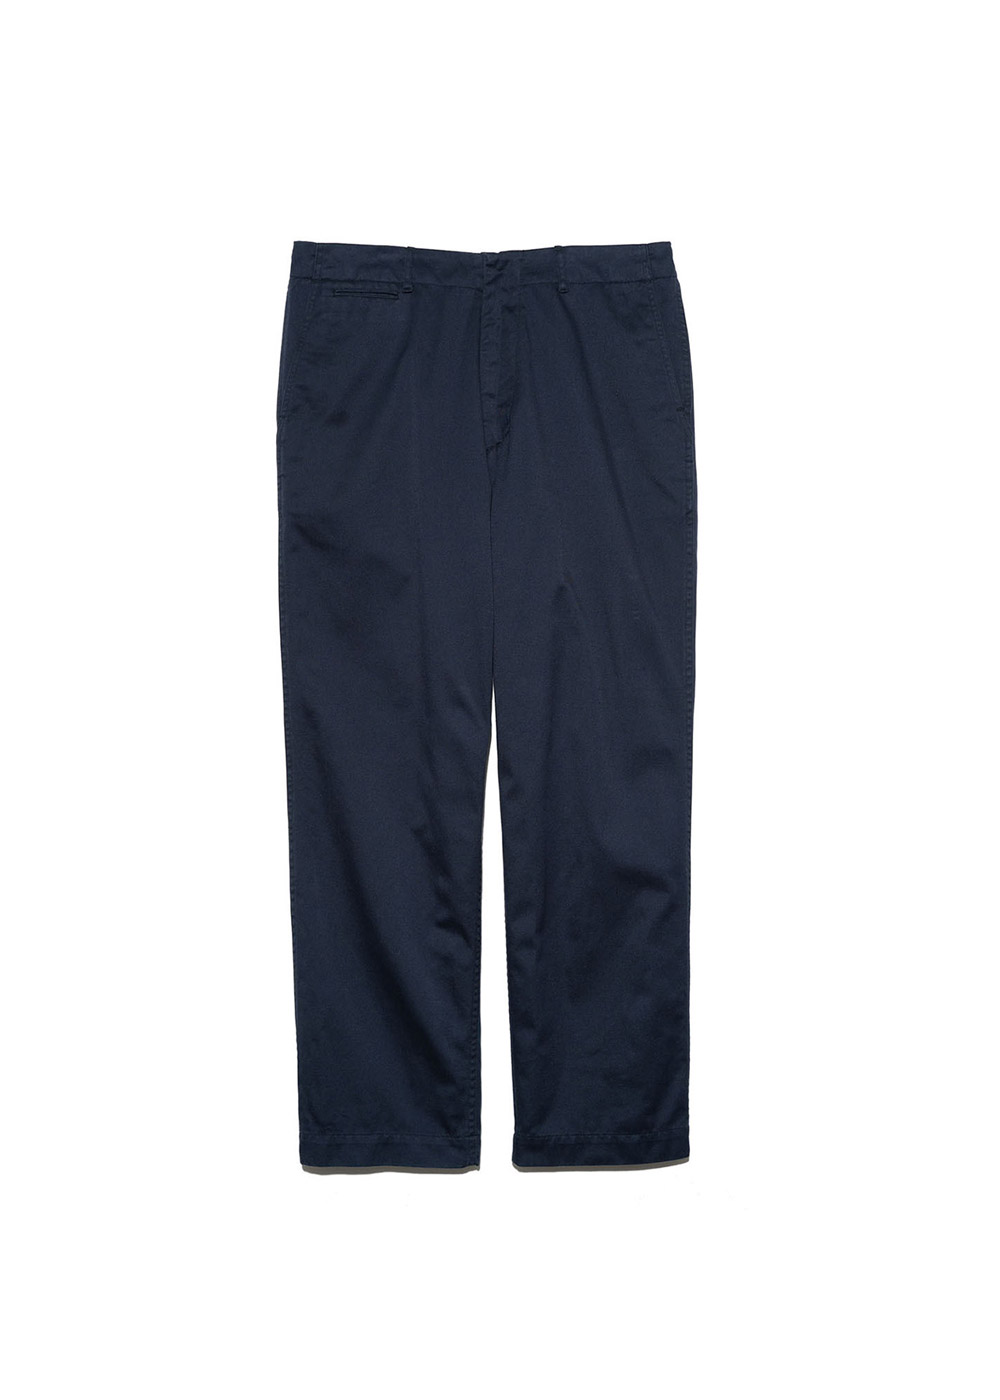 Wide Chino Pants (Navy)